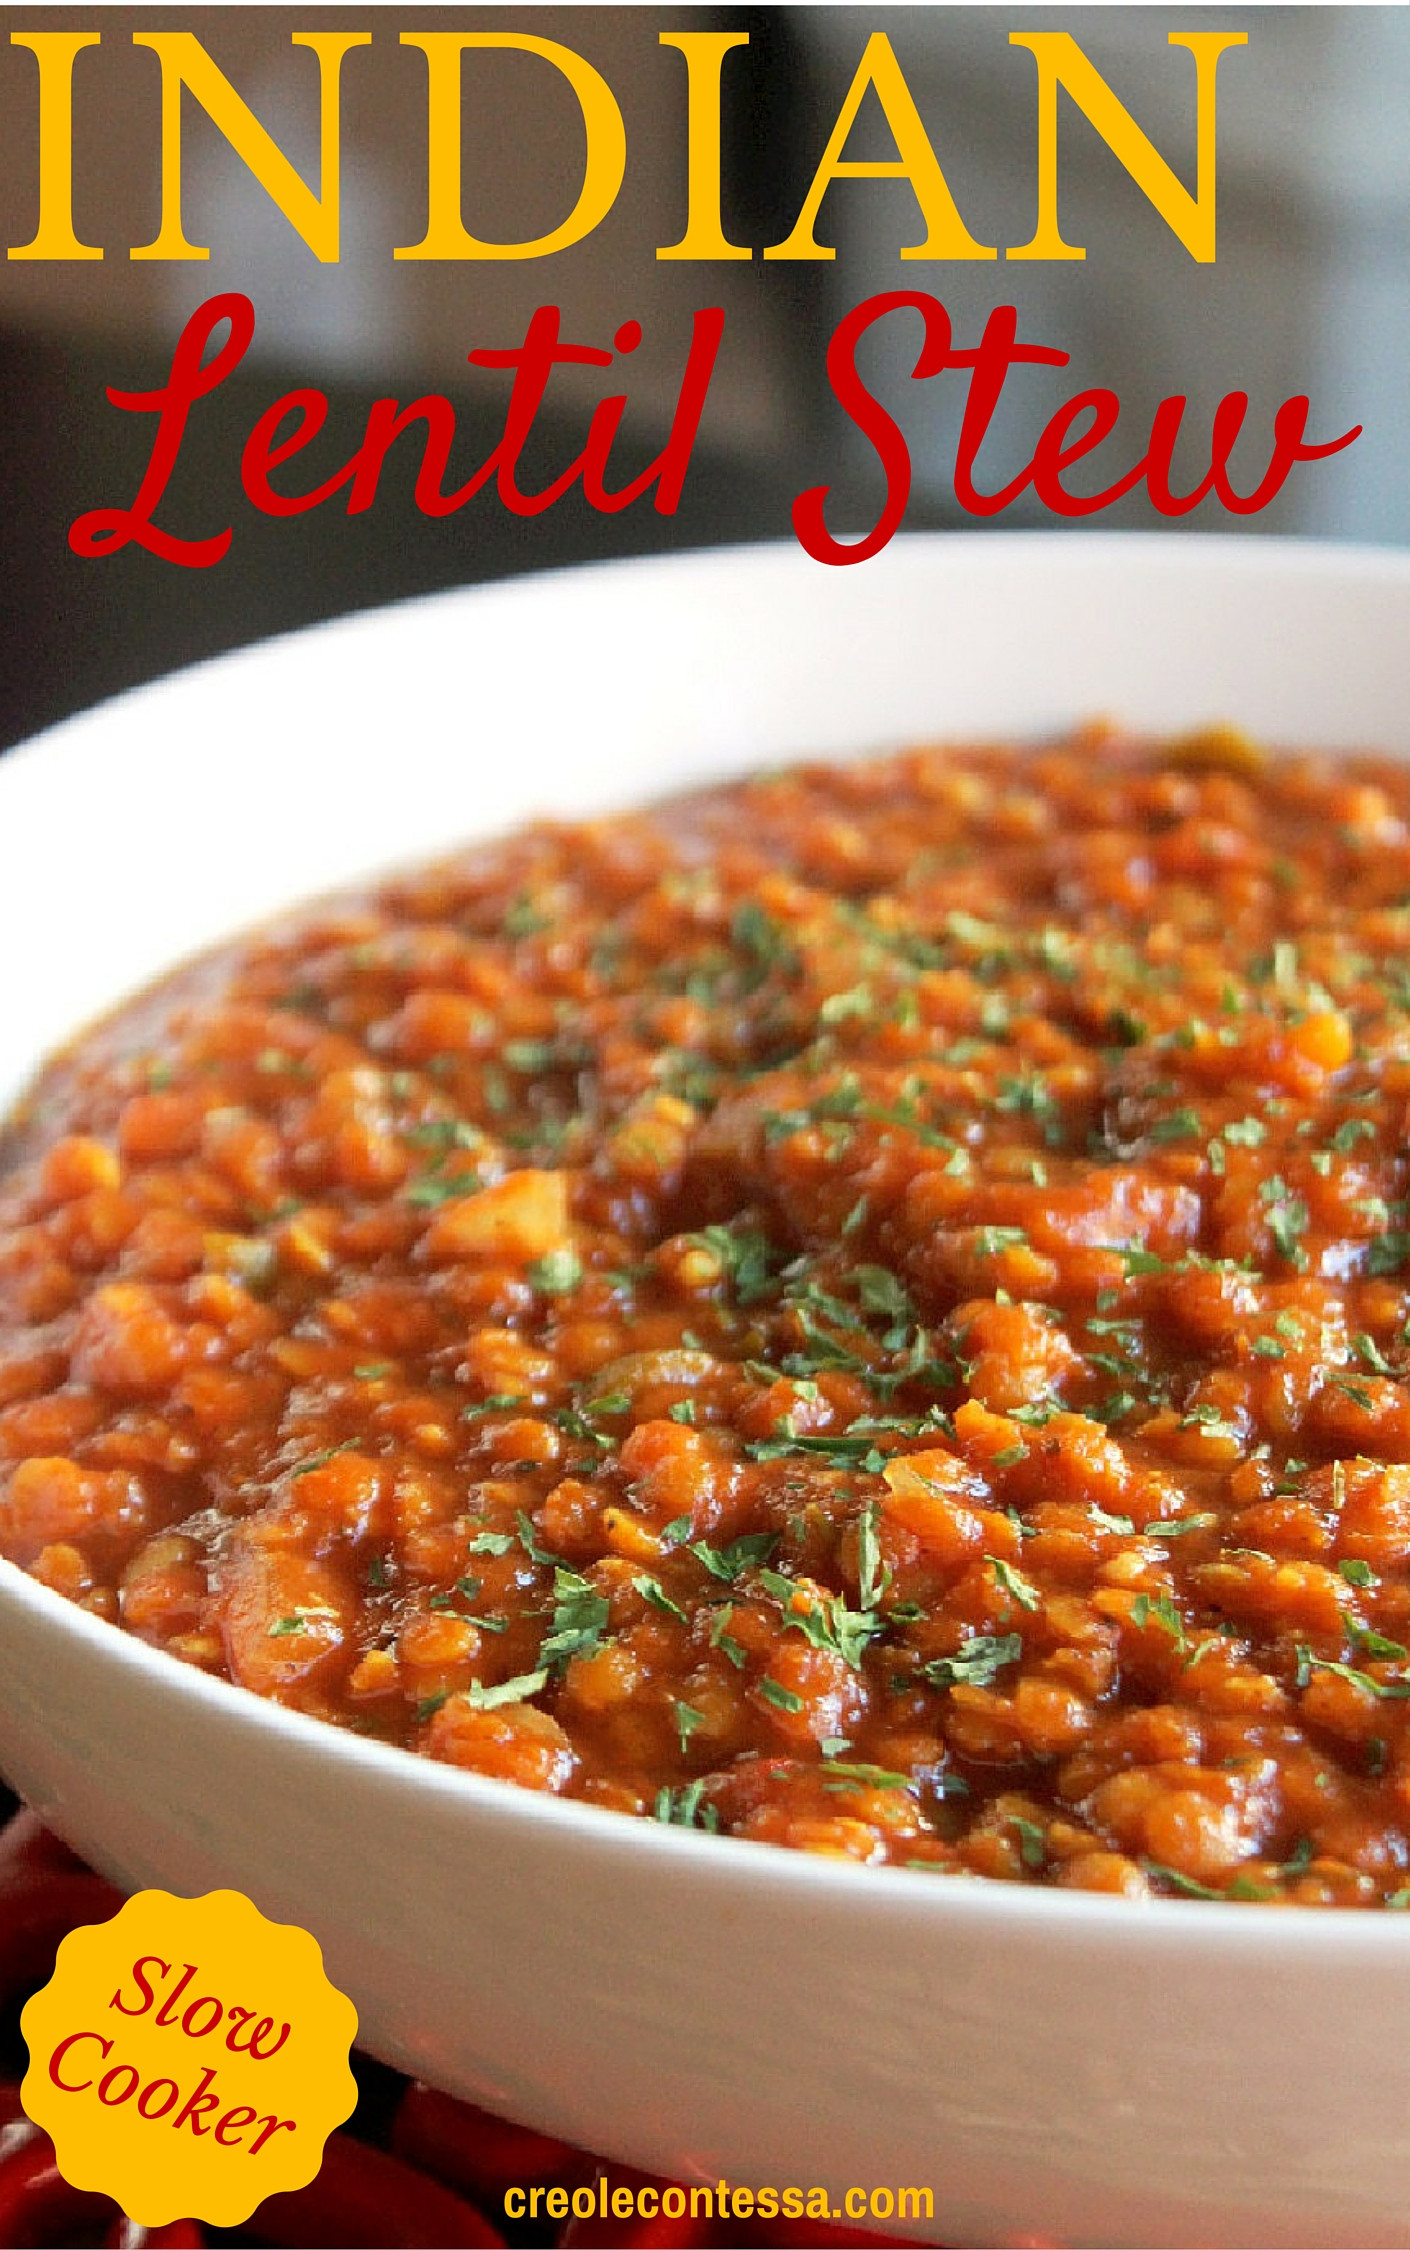 Slow Cooker Indian Recipes
 slow cooker lentil recipes ve arian